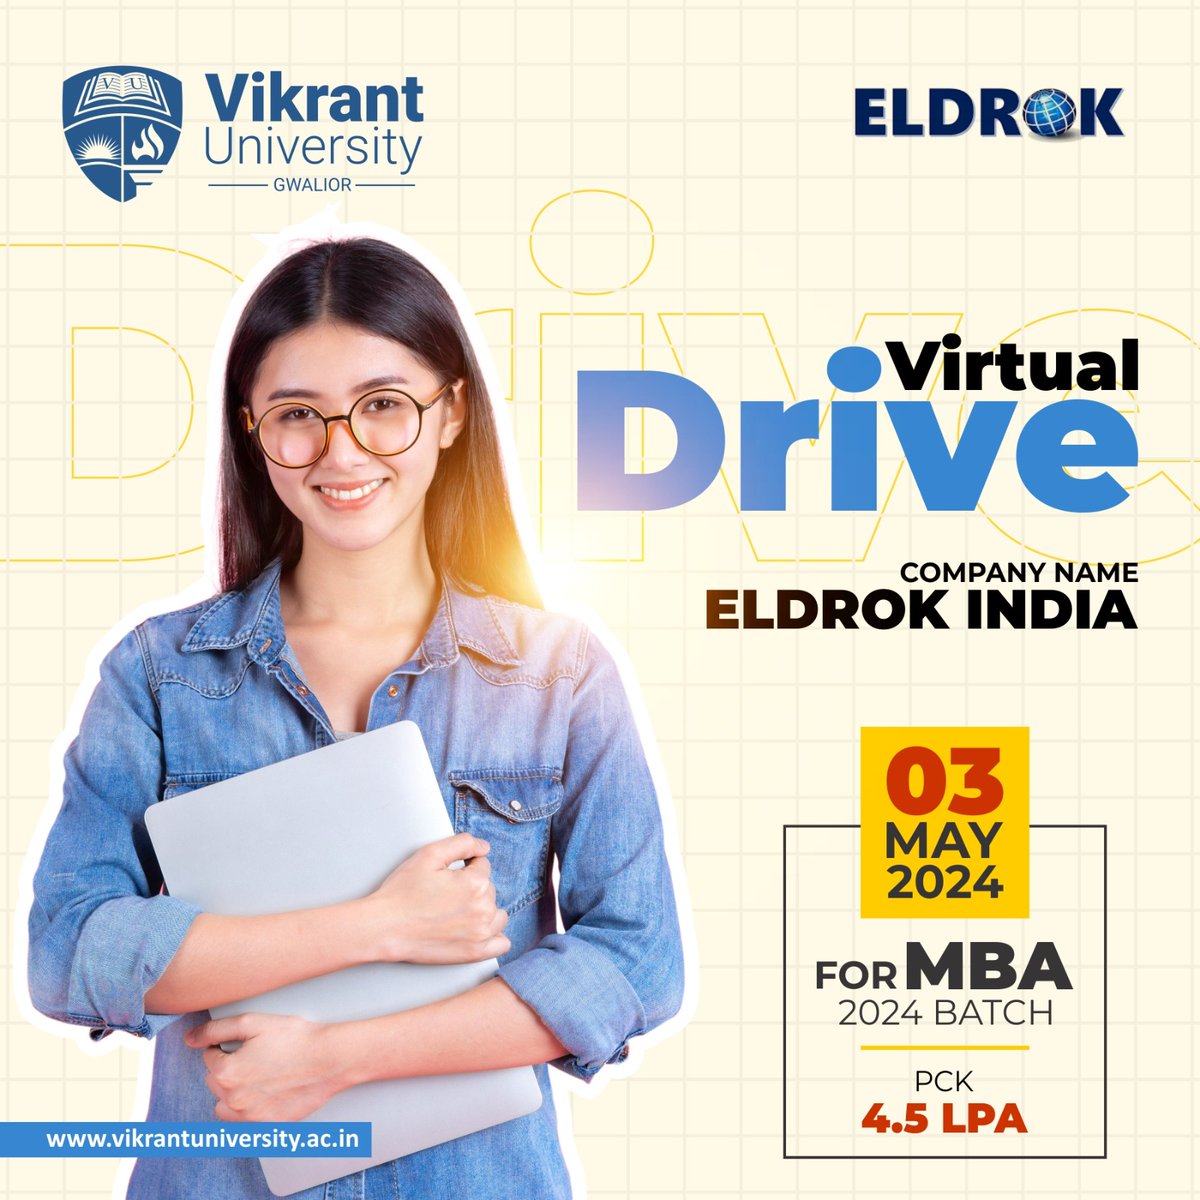 #VikrantUniversity #VikrantGroupofInstitutions #VirtualDrive #ELDROK #Placement #CampusDrive #Gwalior #Indore #MadhyaPradesh #India